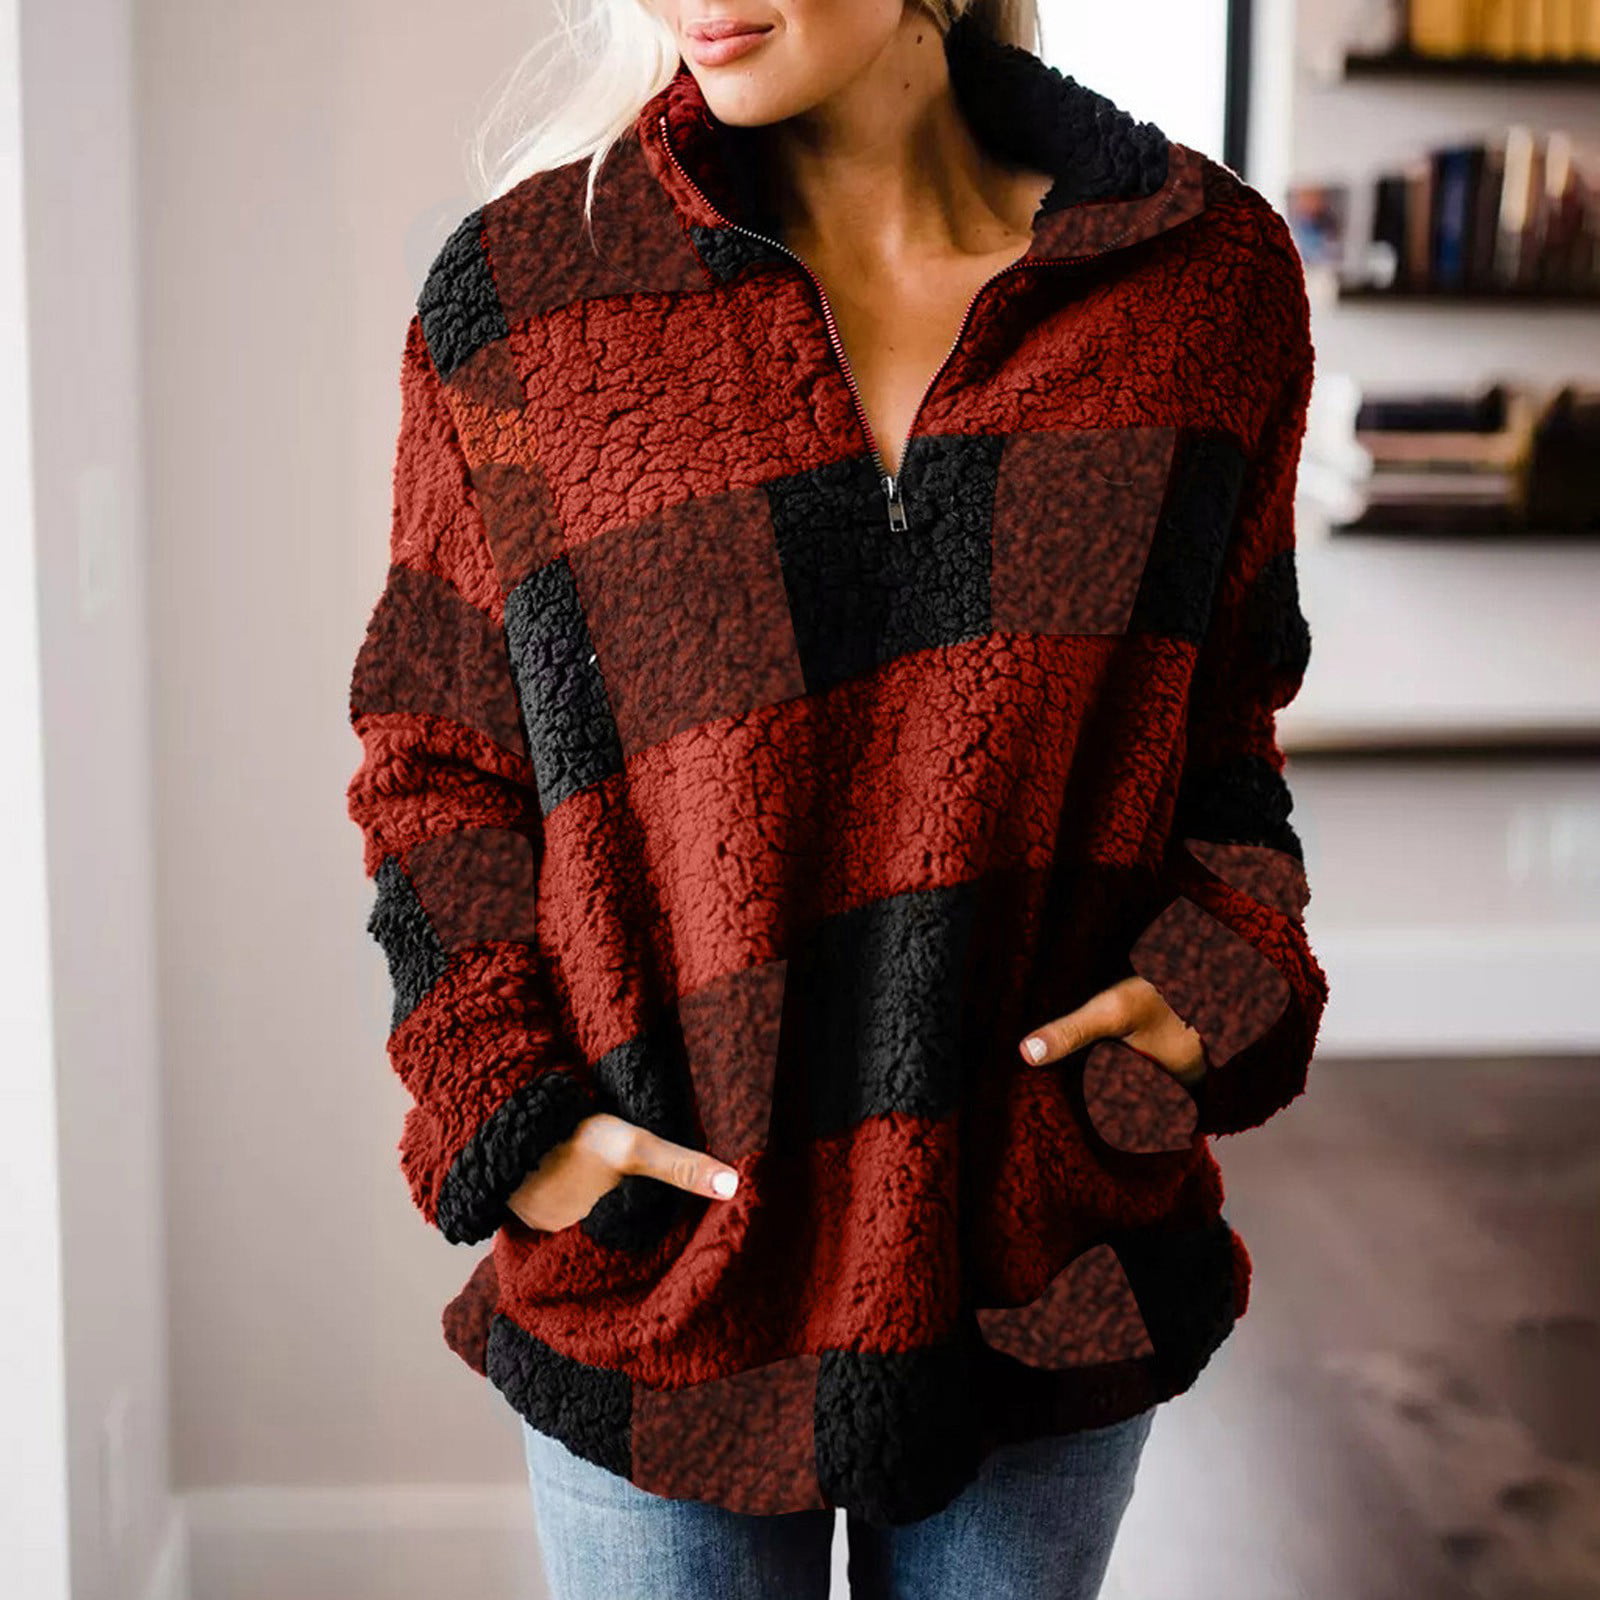 ZESICA Women's Plaid Long Sleeve Zipper Sherpa Fleece Sweatshirt Pullover Jacket Coat with Pockets 